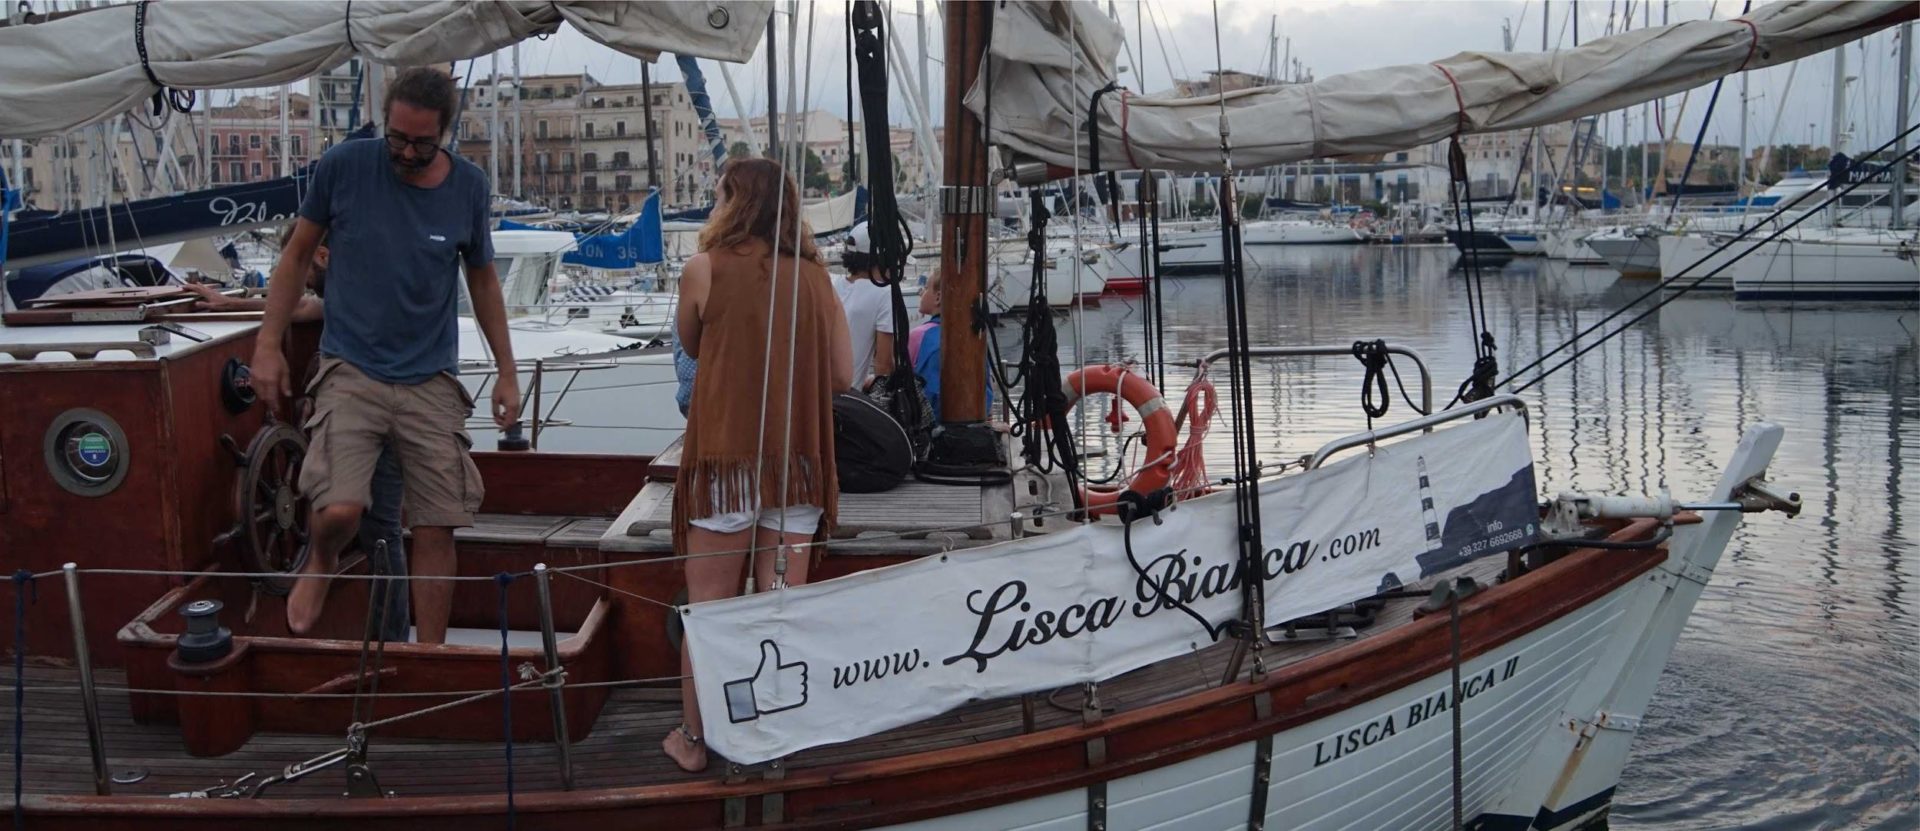 Barca Lisca Bianca 